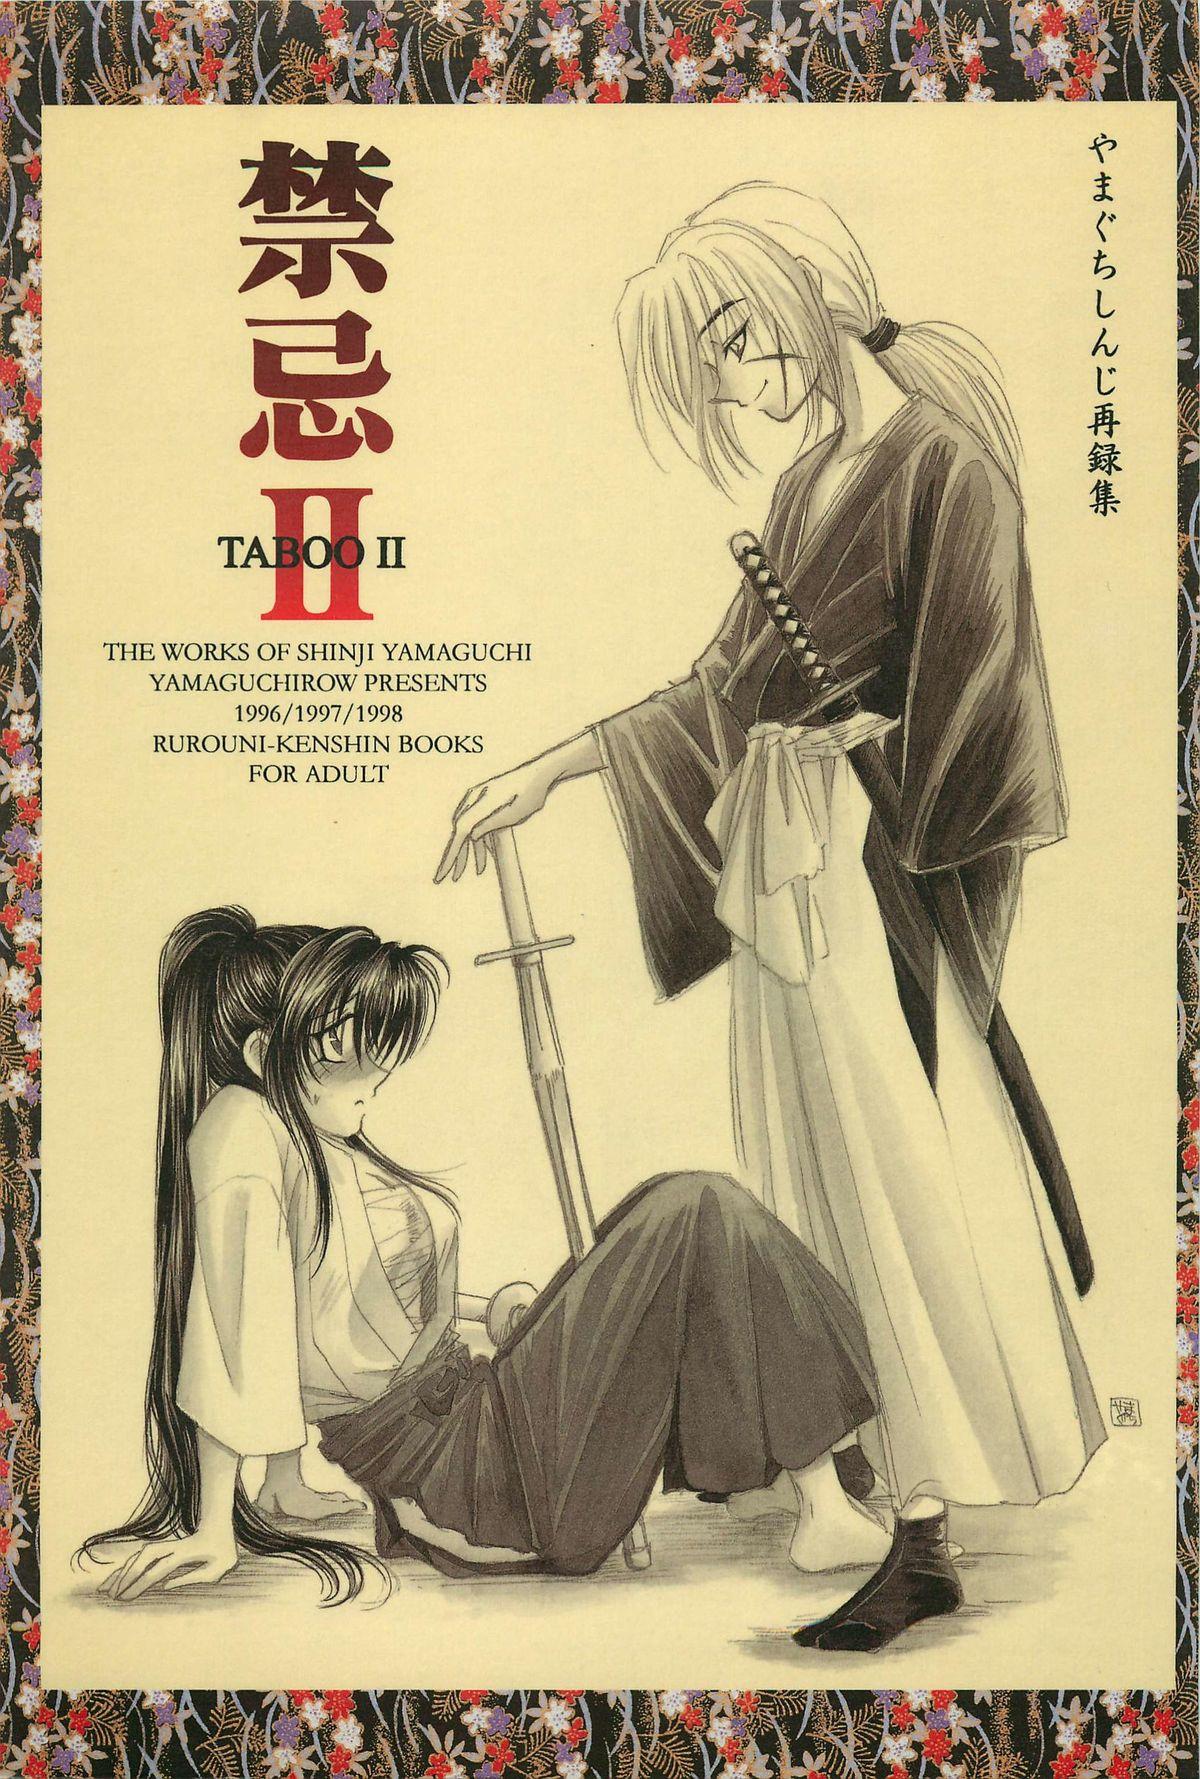 Stepson TABOO II THE WORKS OF SHINJI YAMAGUCHI - Rurouni kenshin Oral Sex - Page 1